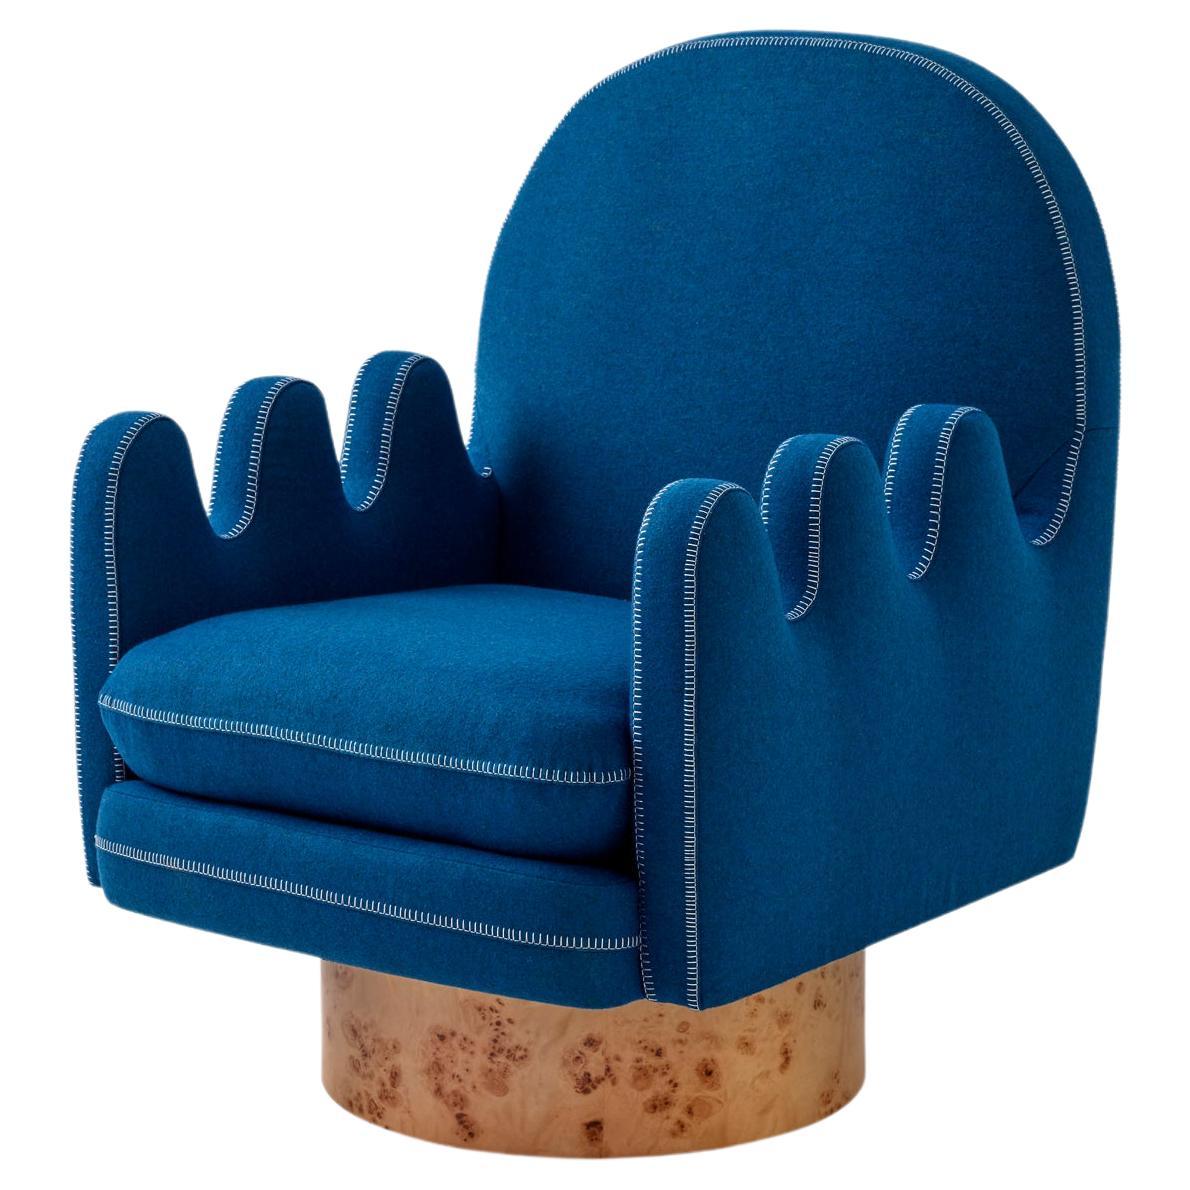 Semo-Sessel mit marineblauem Stoff und poliertem Wurzelholz im Angebot